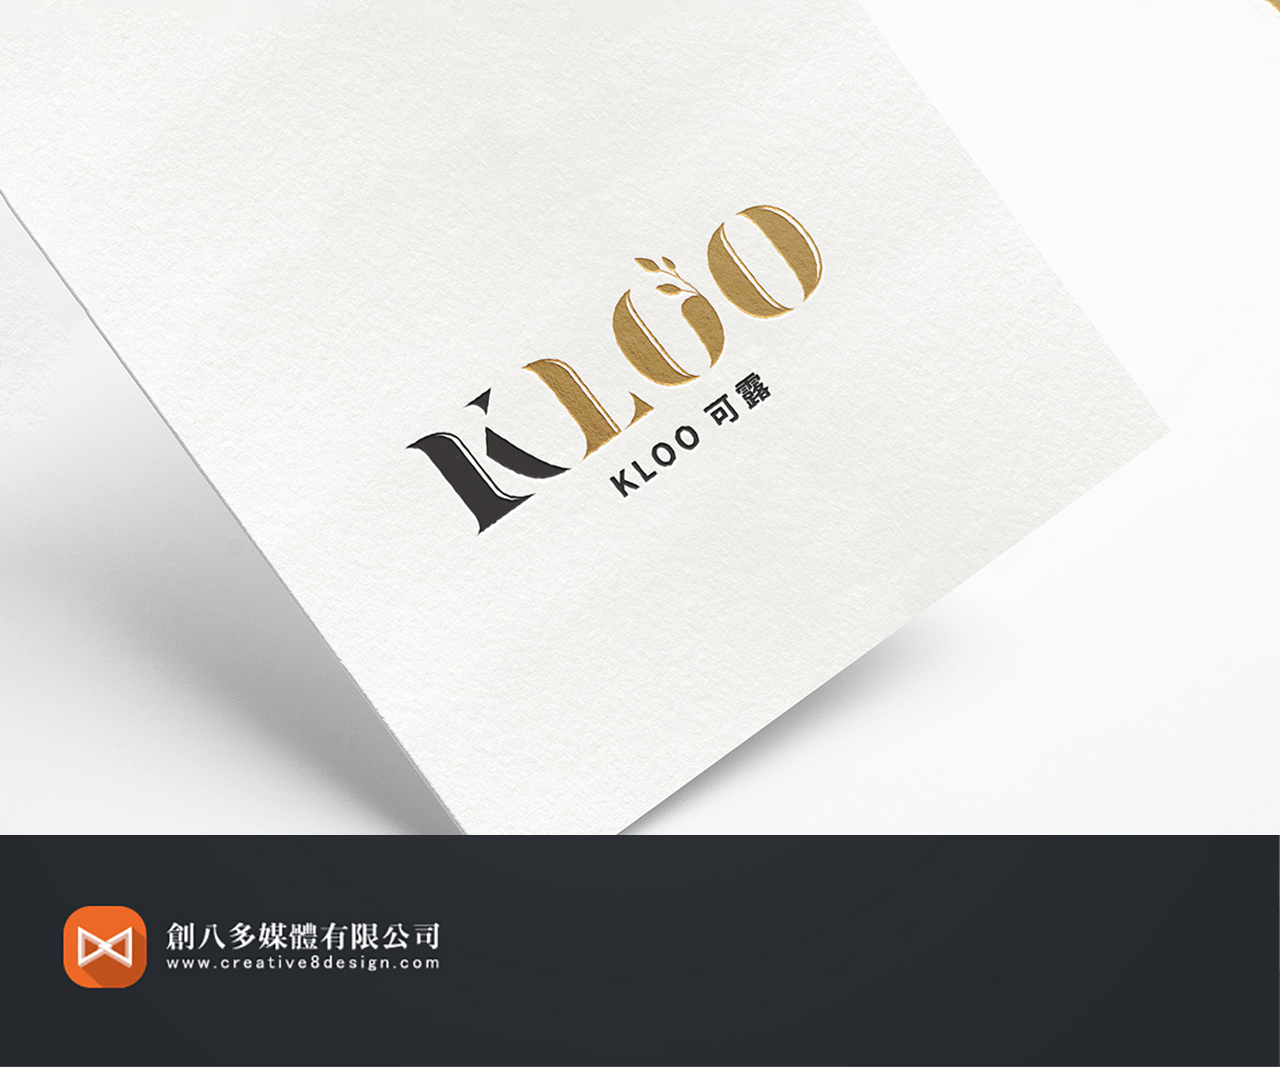 KLOO可露的LOGO設計示意圖